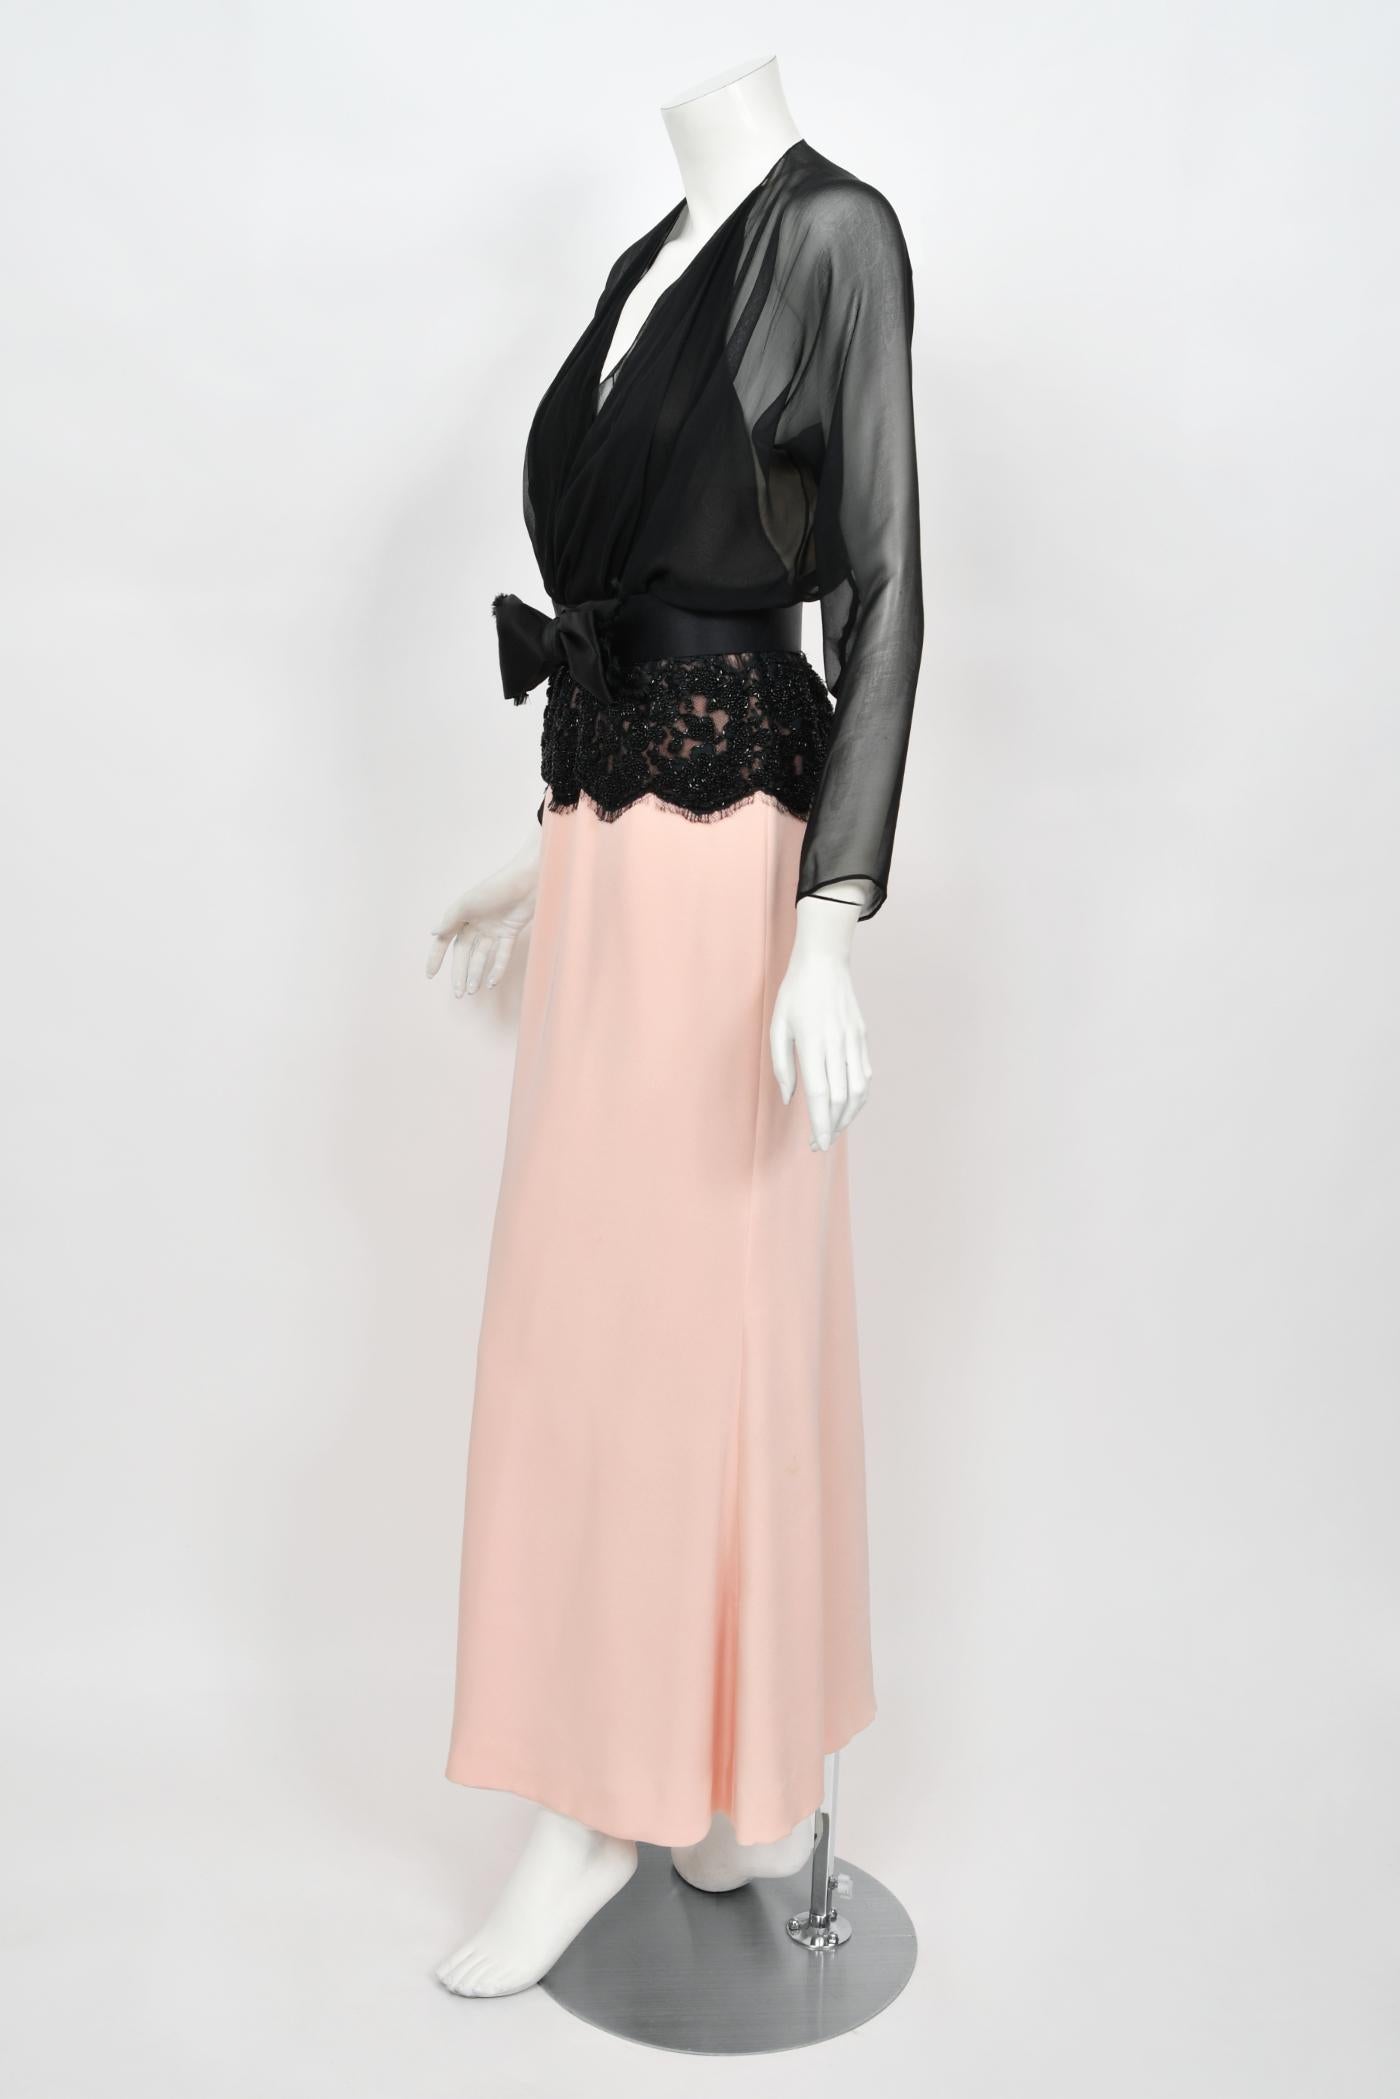 1986 Oscar de la Renta Documented Runway Black Sheer Chiffon & Pink Silk Gown For Sale 1